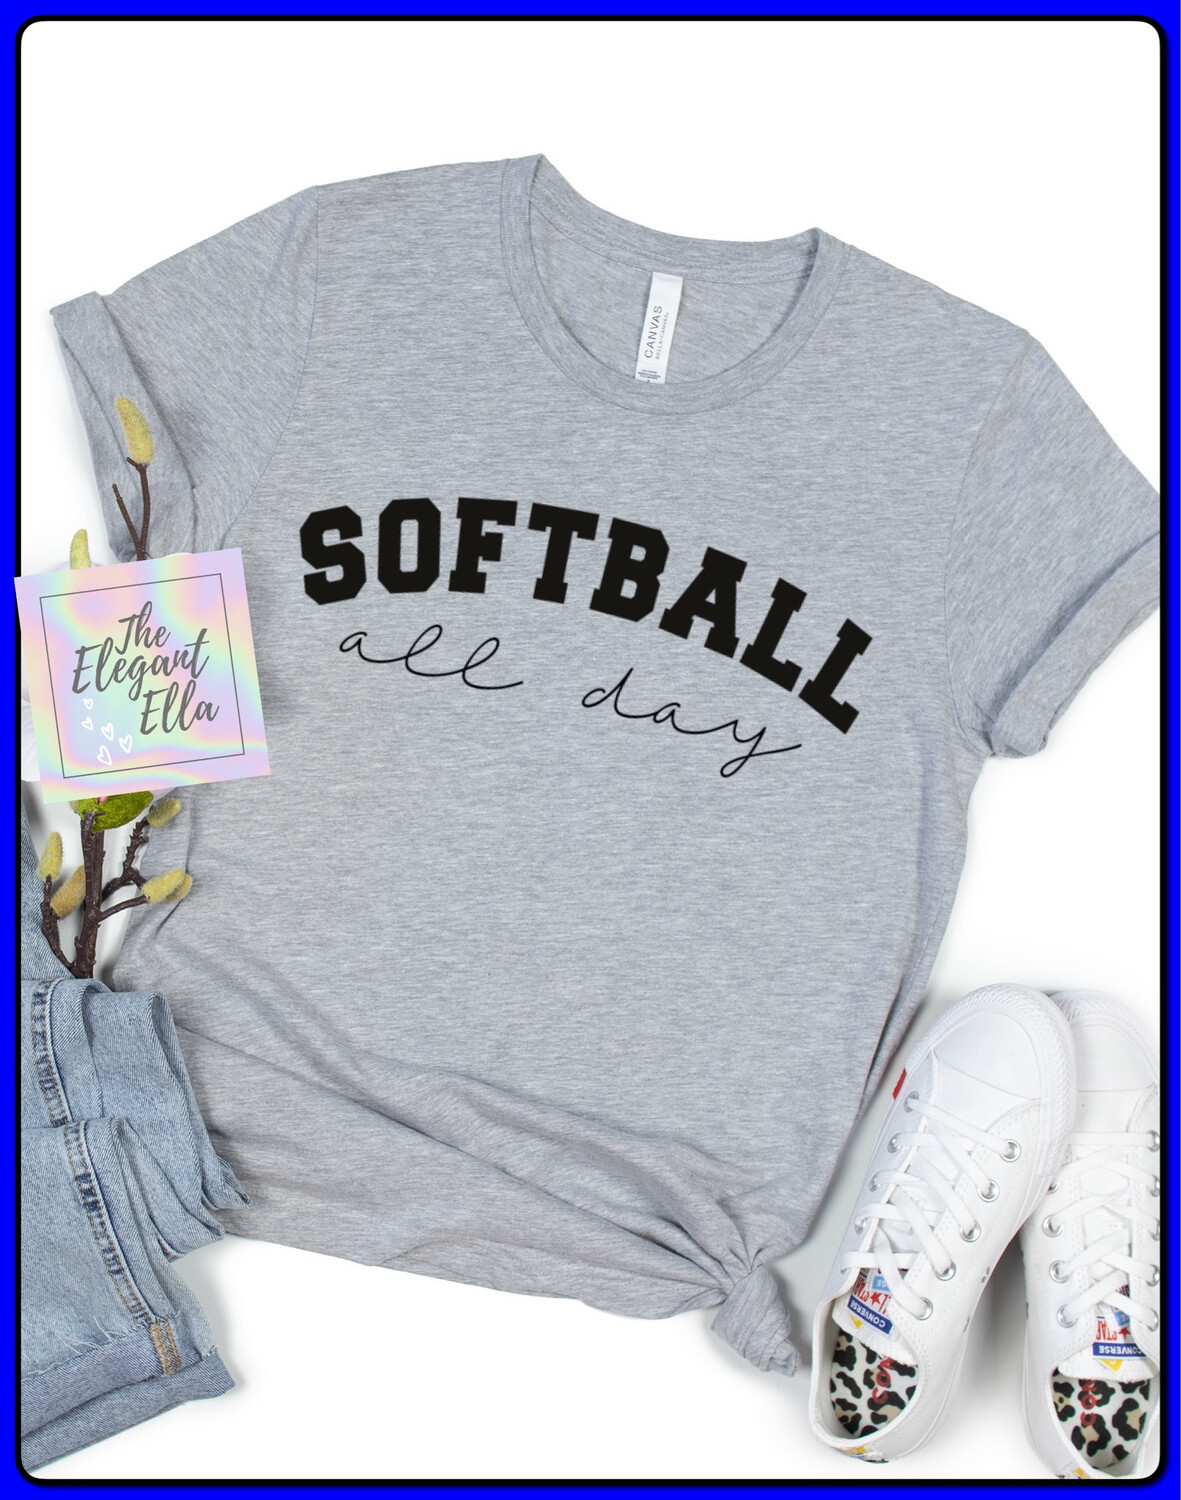  Softball All day Gray Unisex T-Shirt 